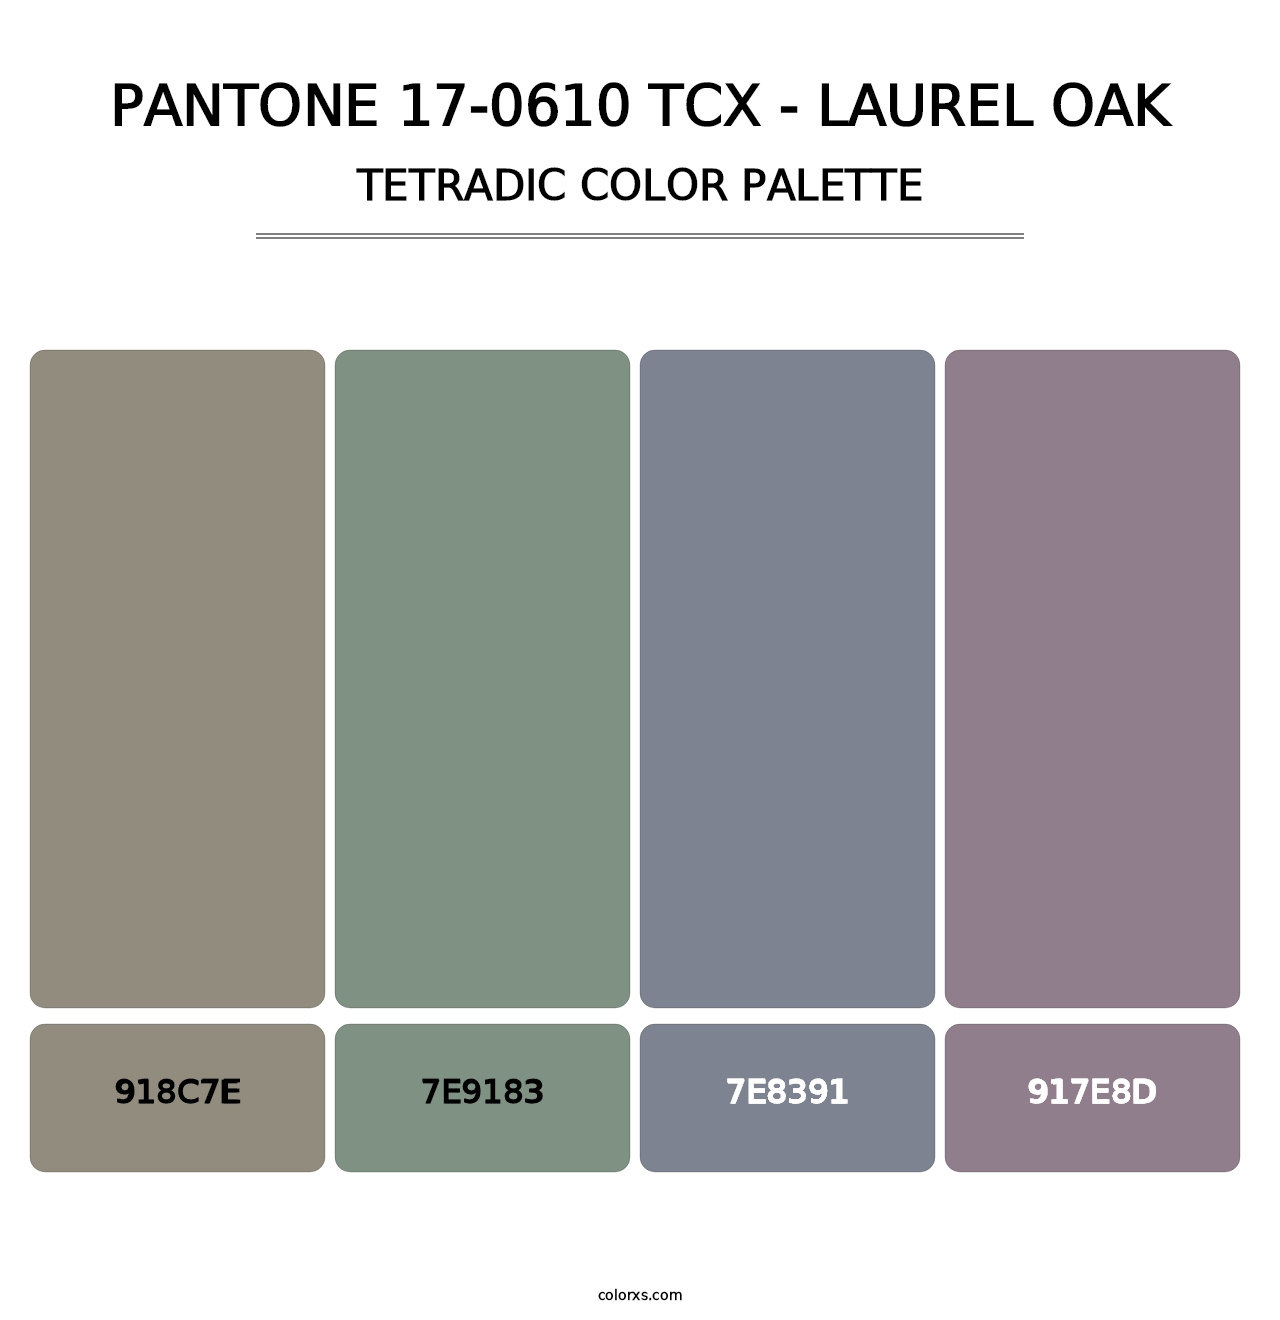 PANTONE 17-0610 TCX - Laurel Oak - Tetradic Color Palette